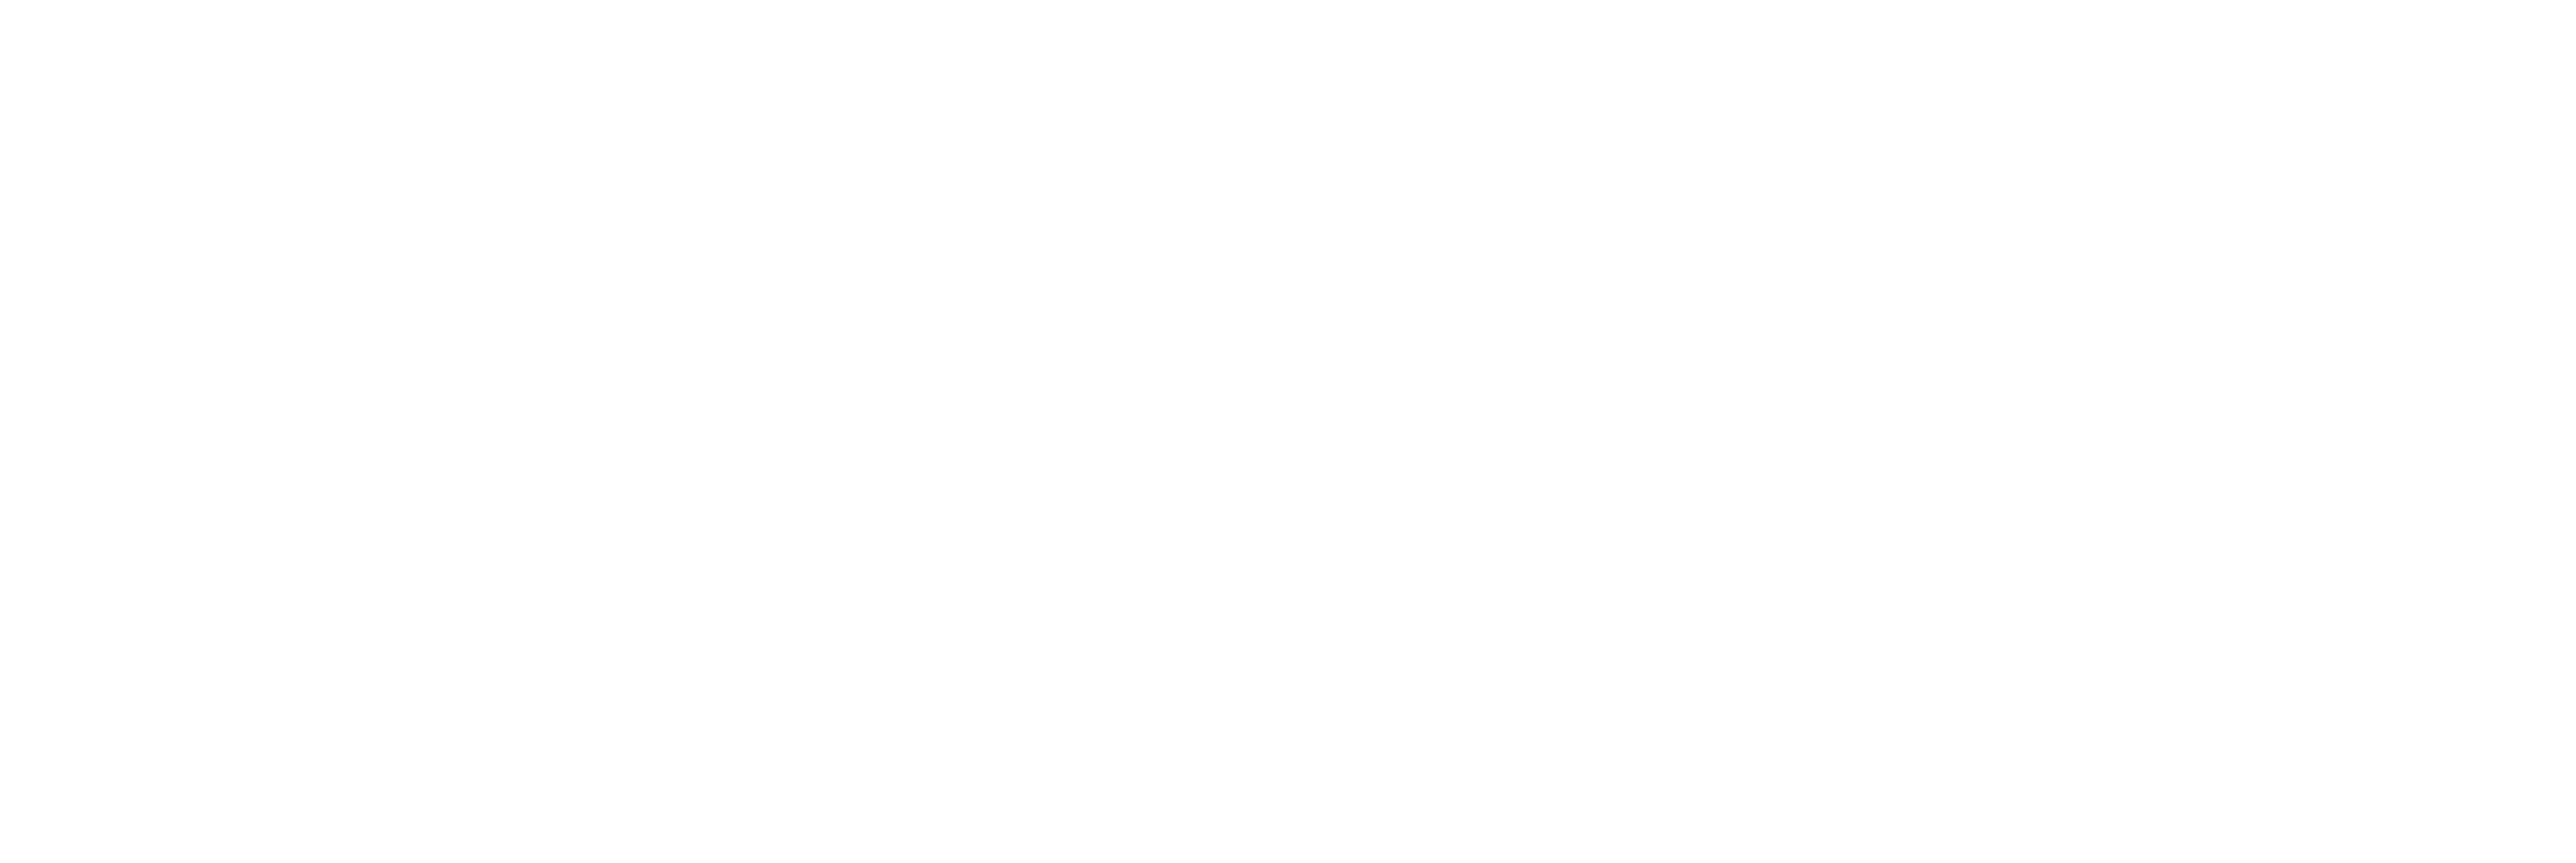 arcules logo